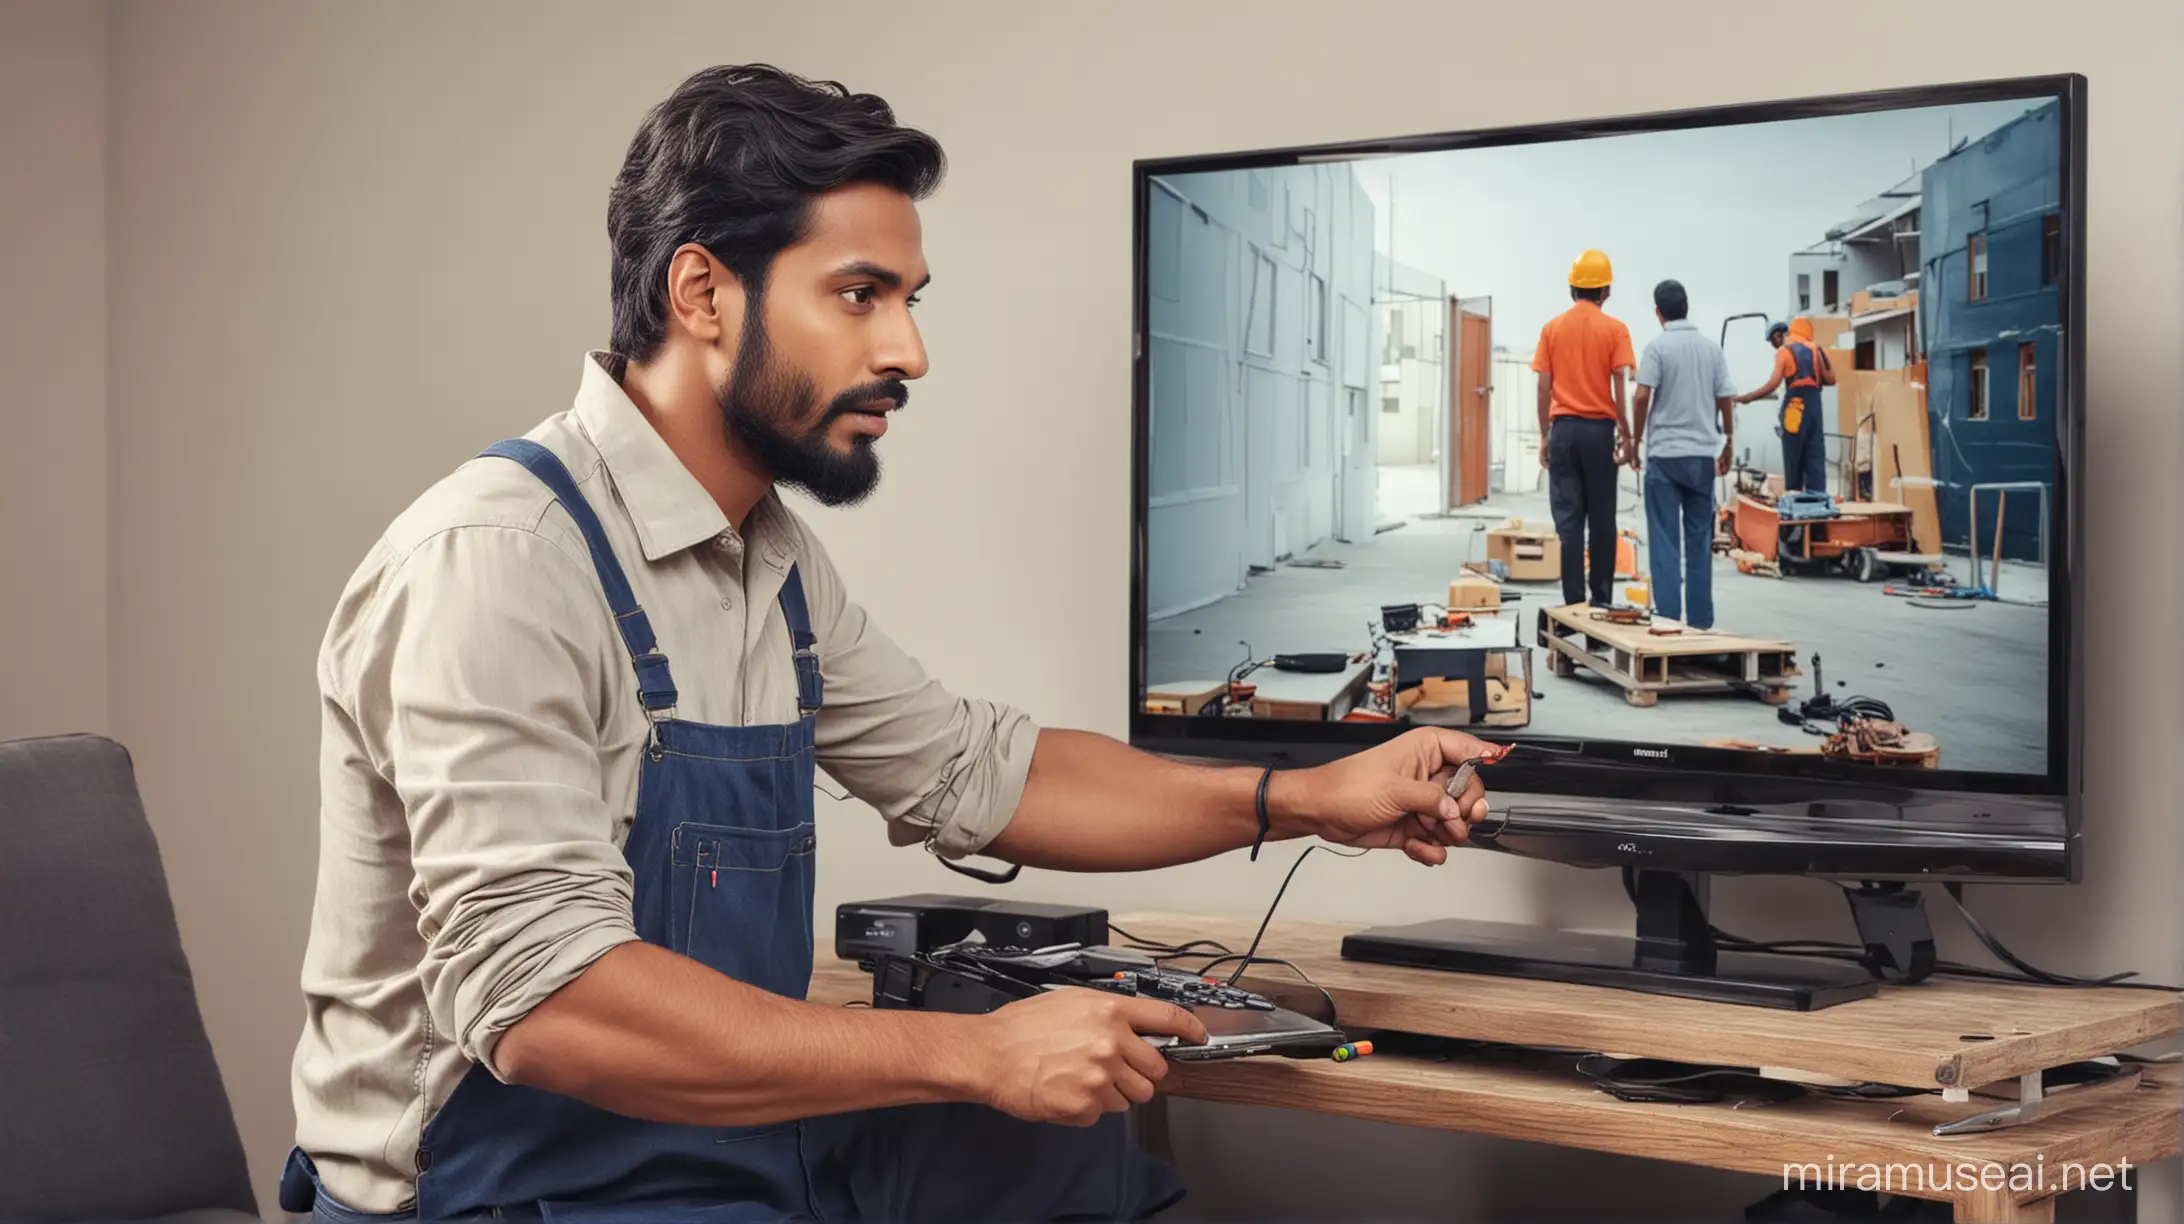 please create a banner image where a samrt TV indian technician /labour is repairing Smart TV 